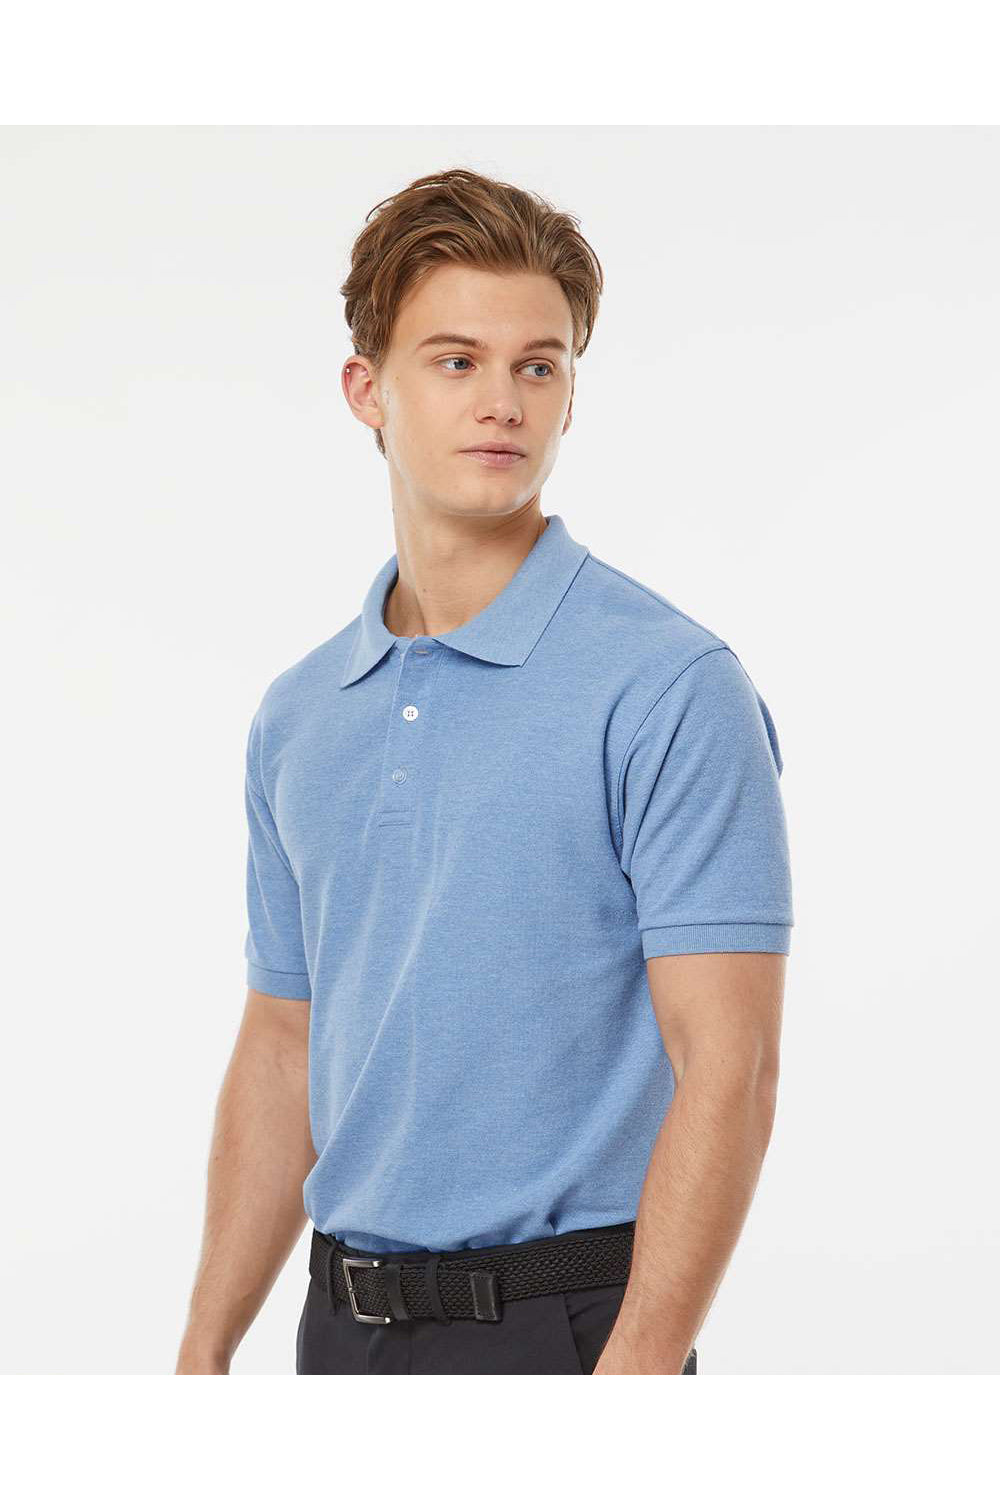 Tultex 400 Mens Sport Shirt Sleeve Polo Shirt Heather Light Blue Model Side